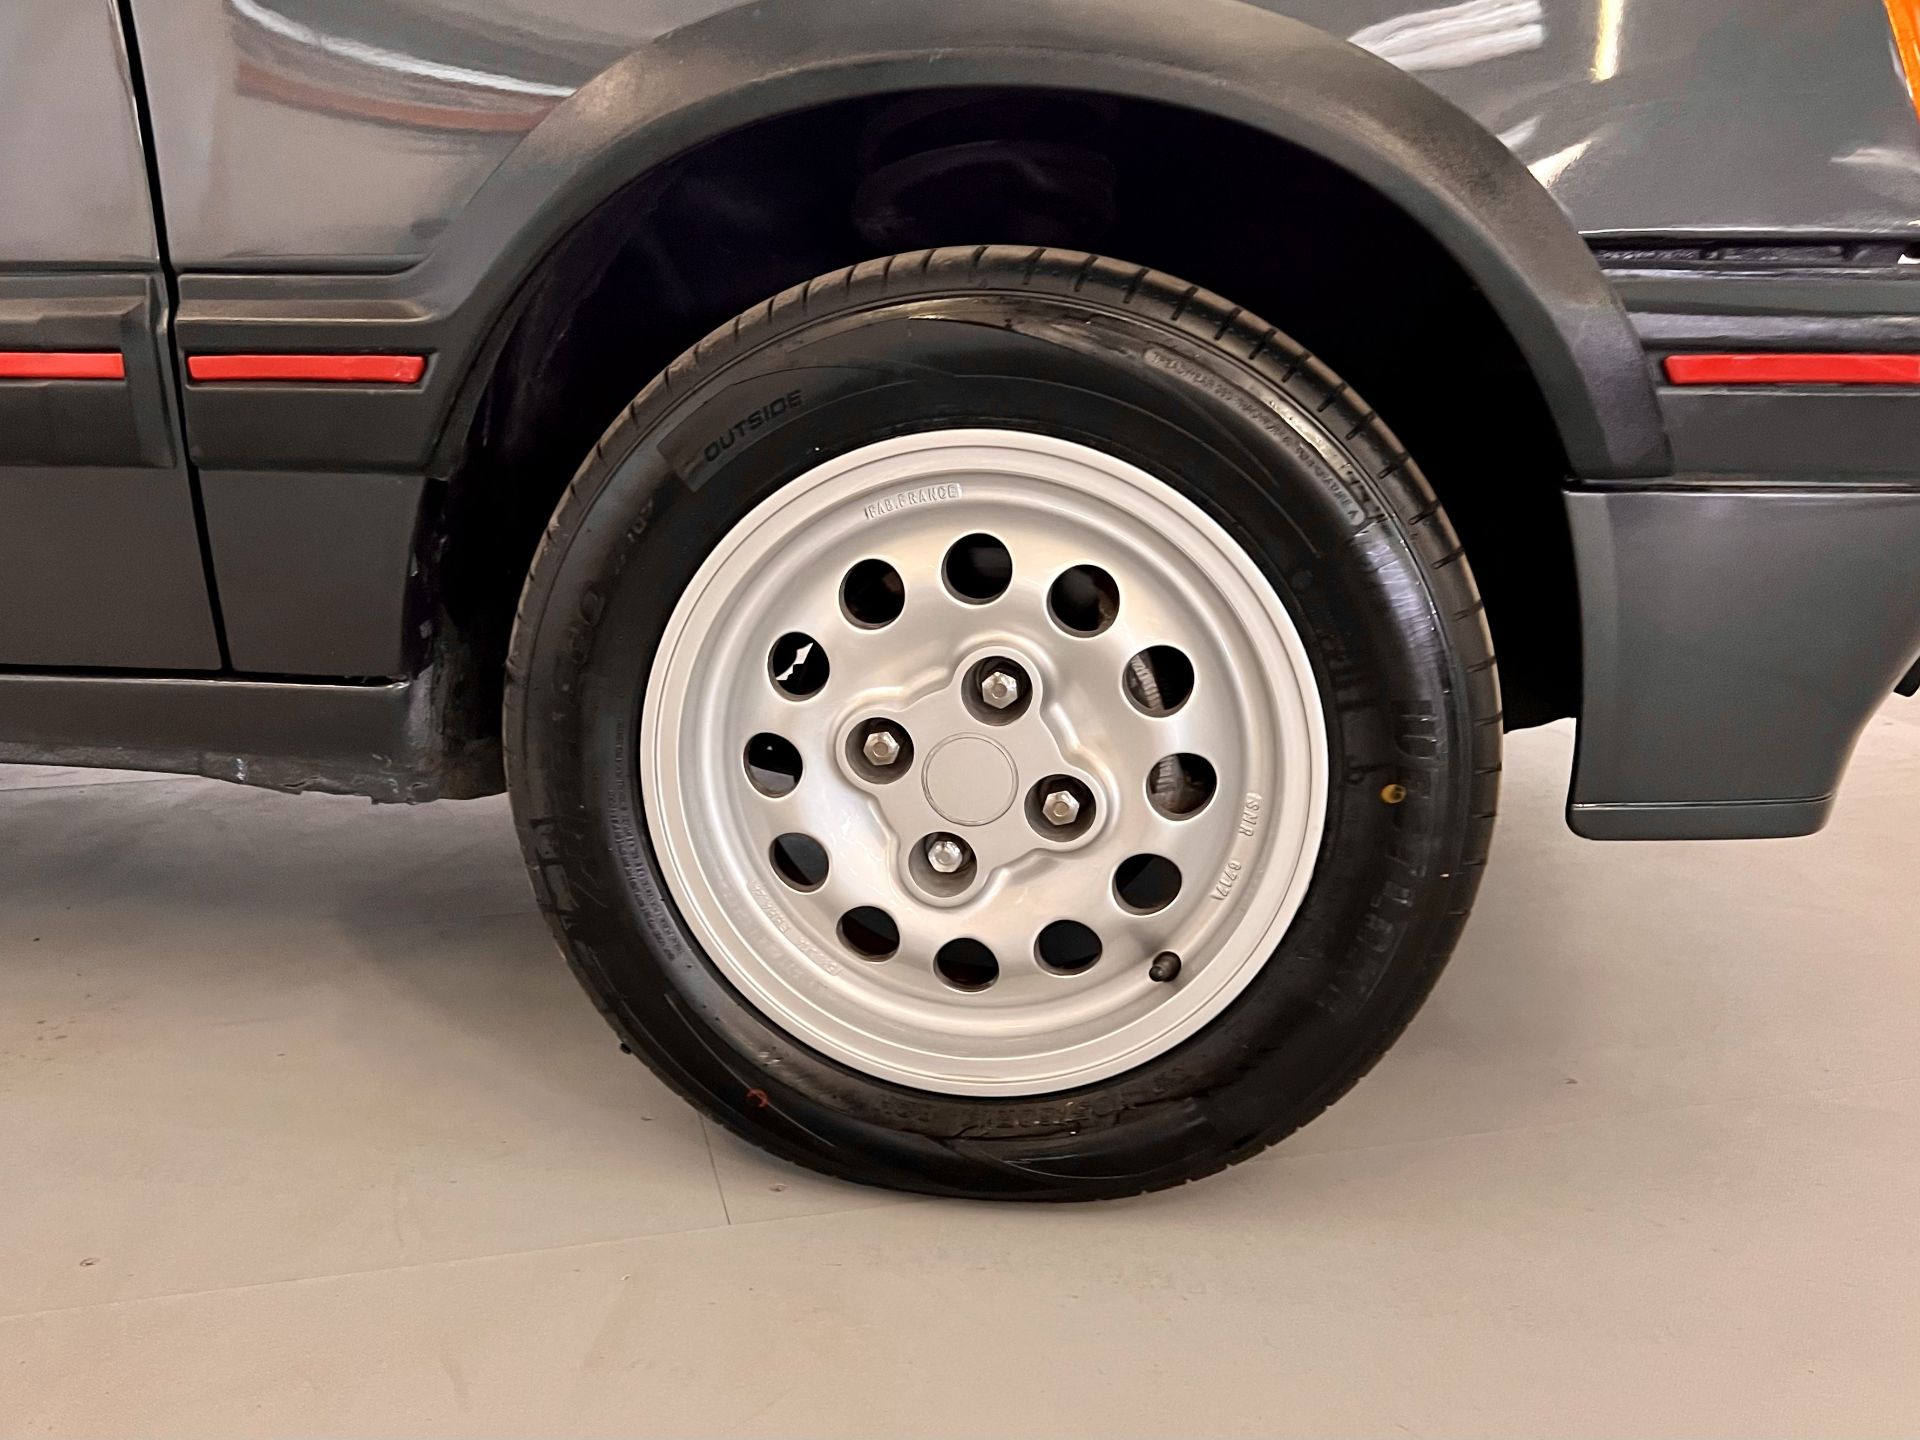 Peugeot 205 GTI - Image 13 of 31